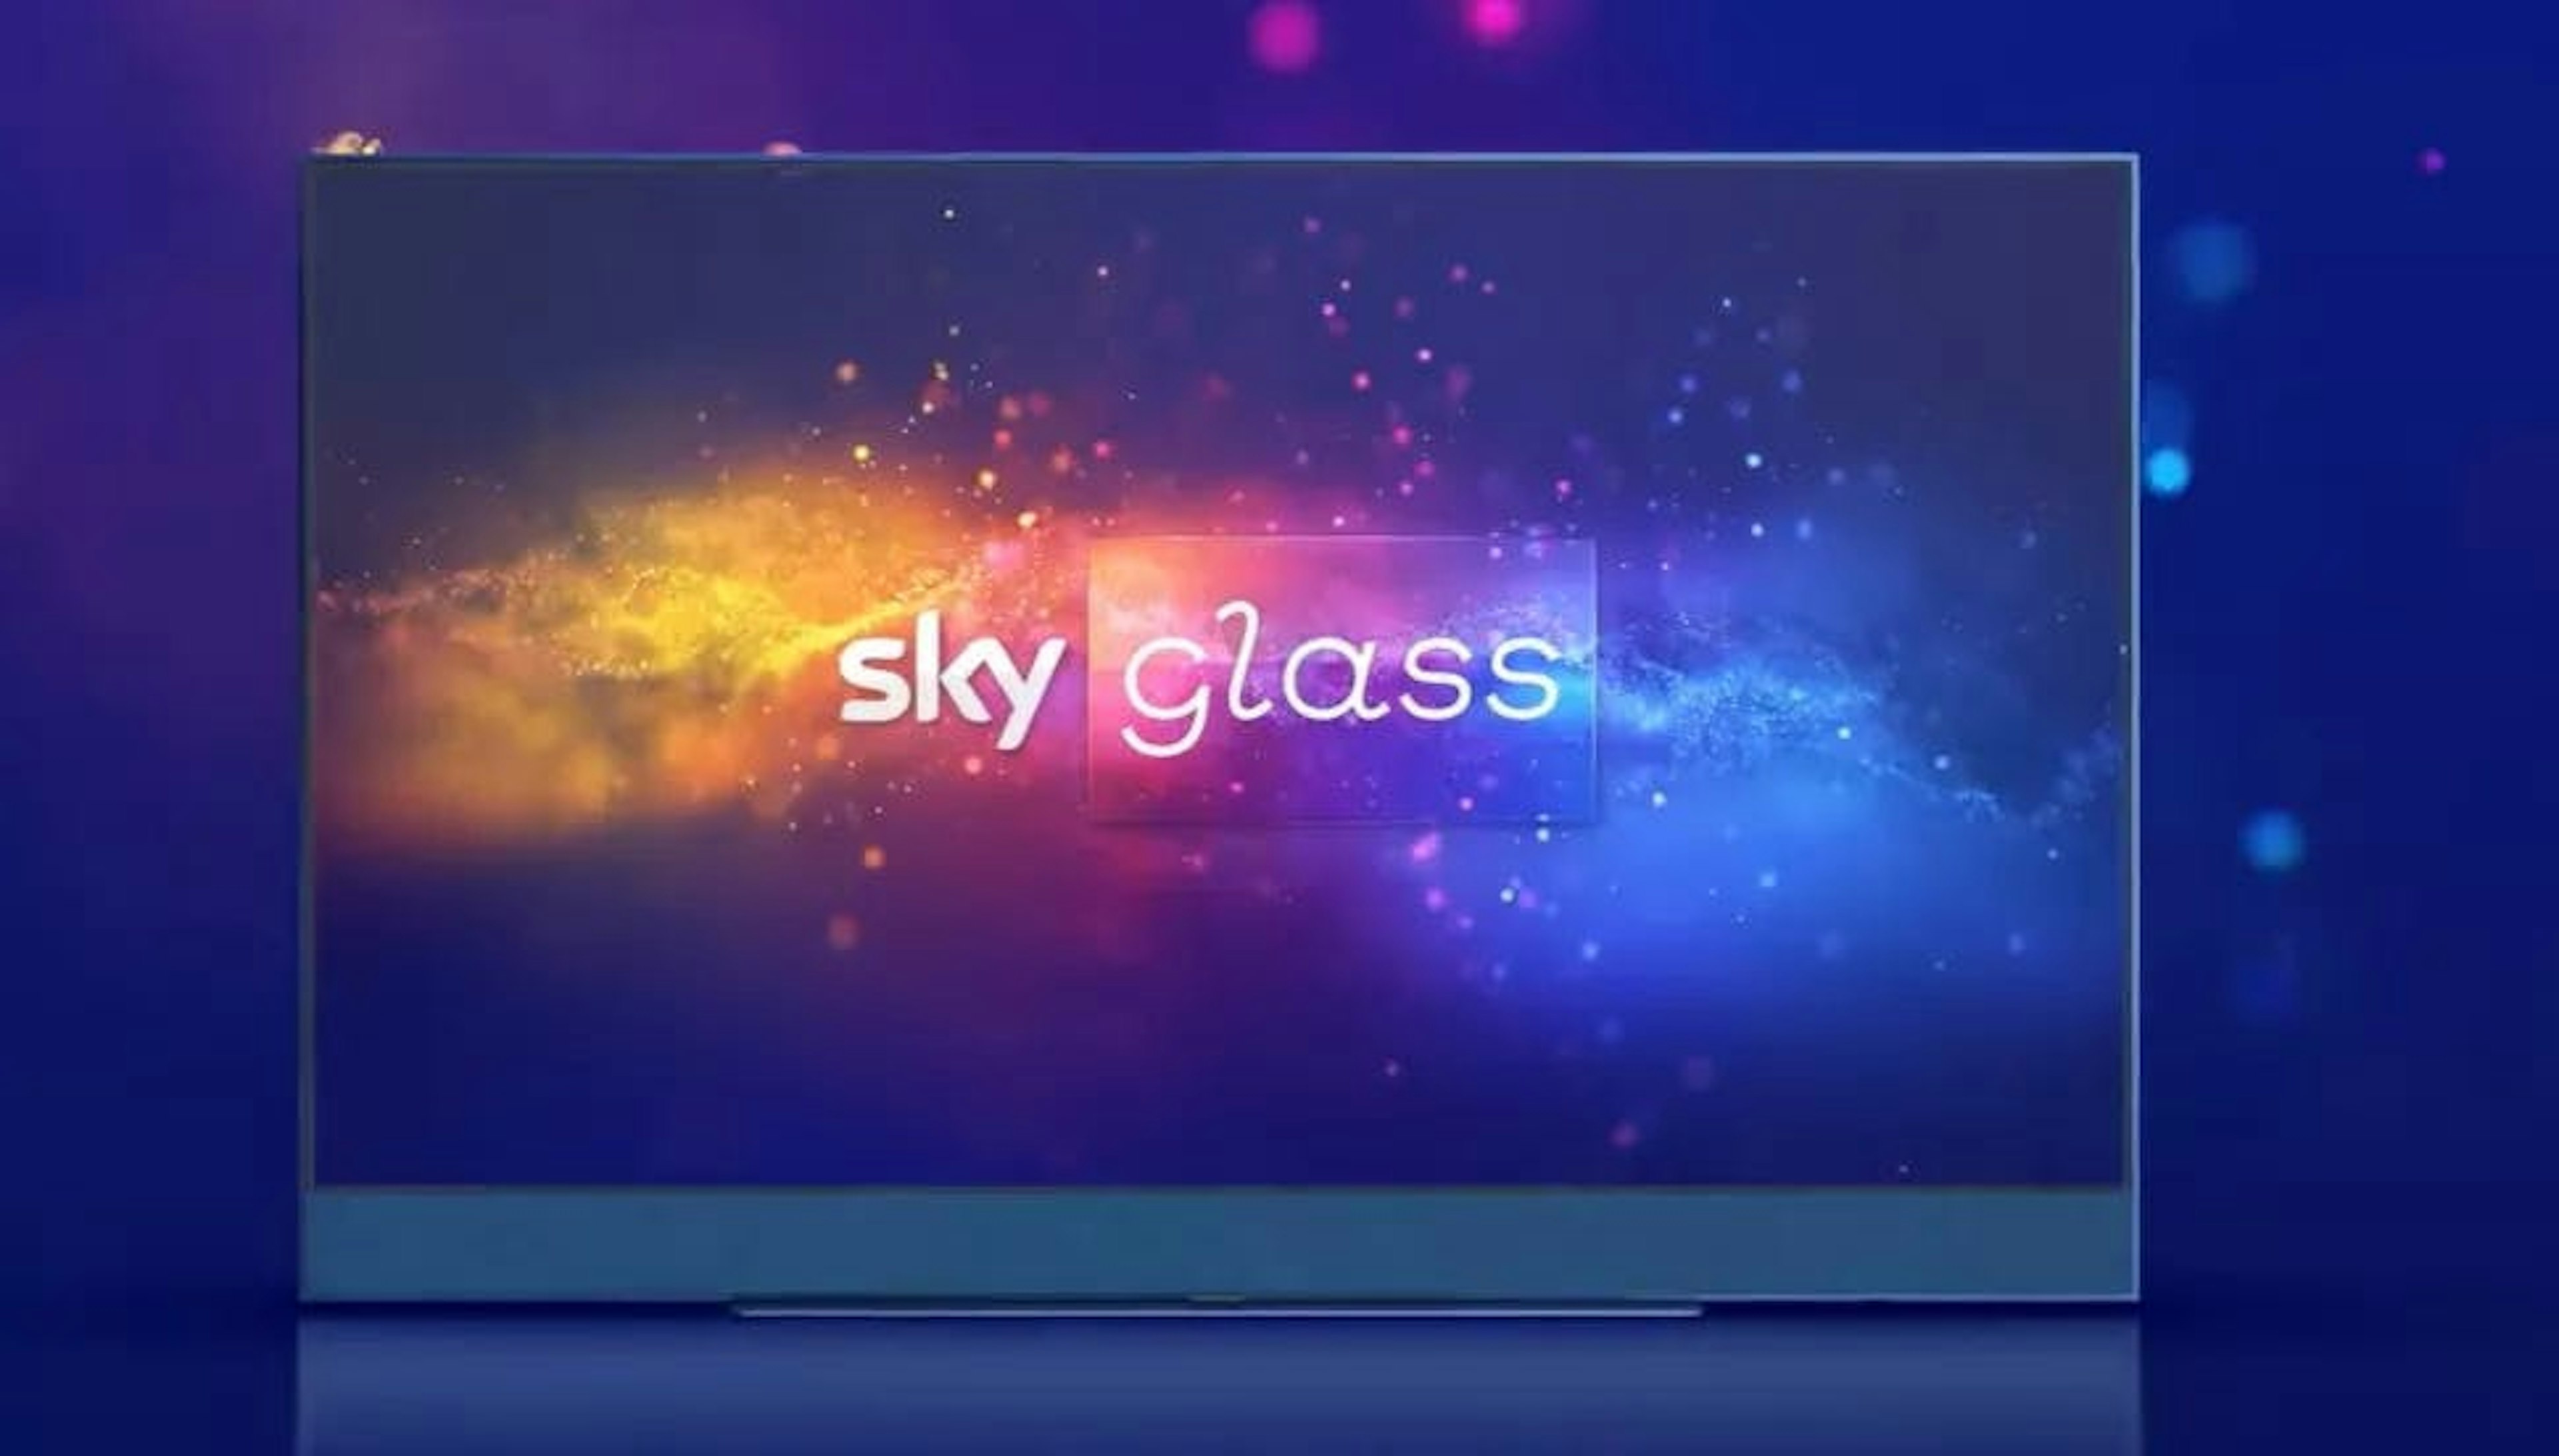 The Sky Glass TV